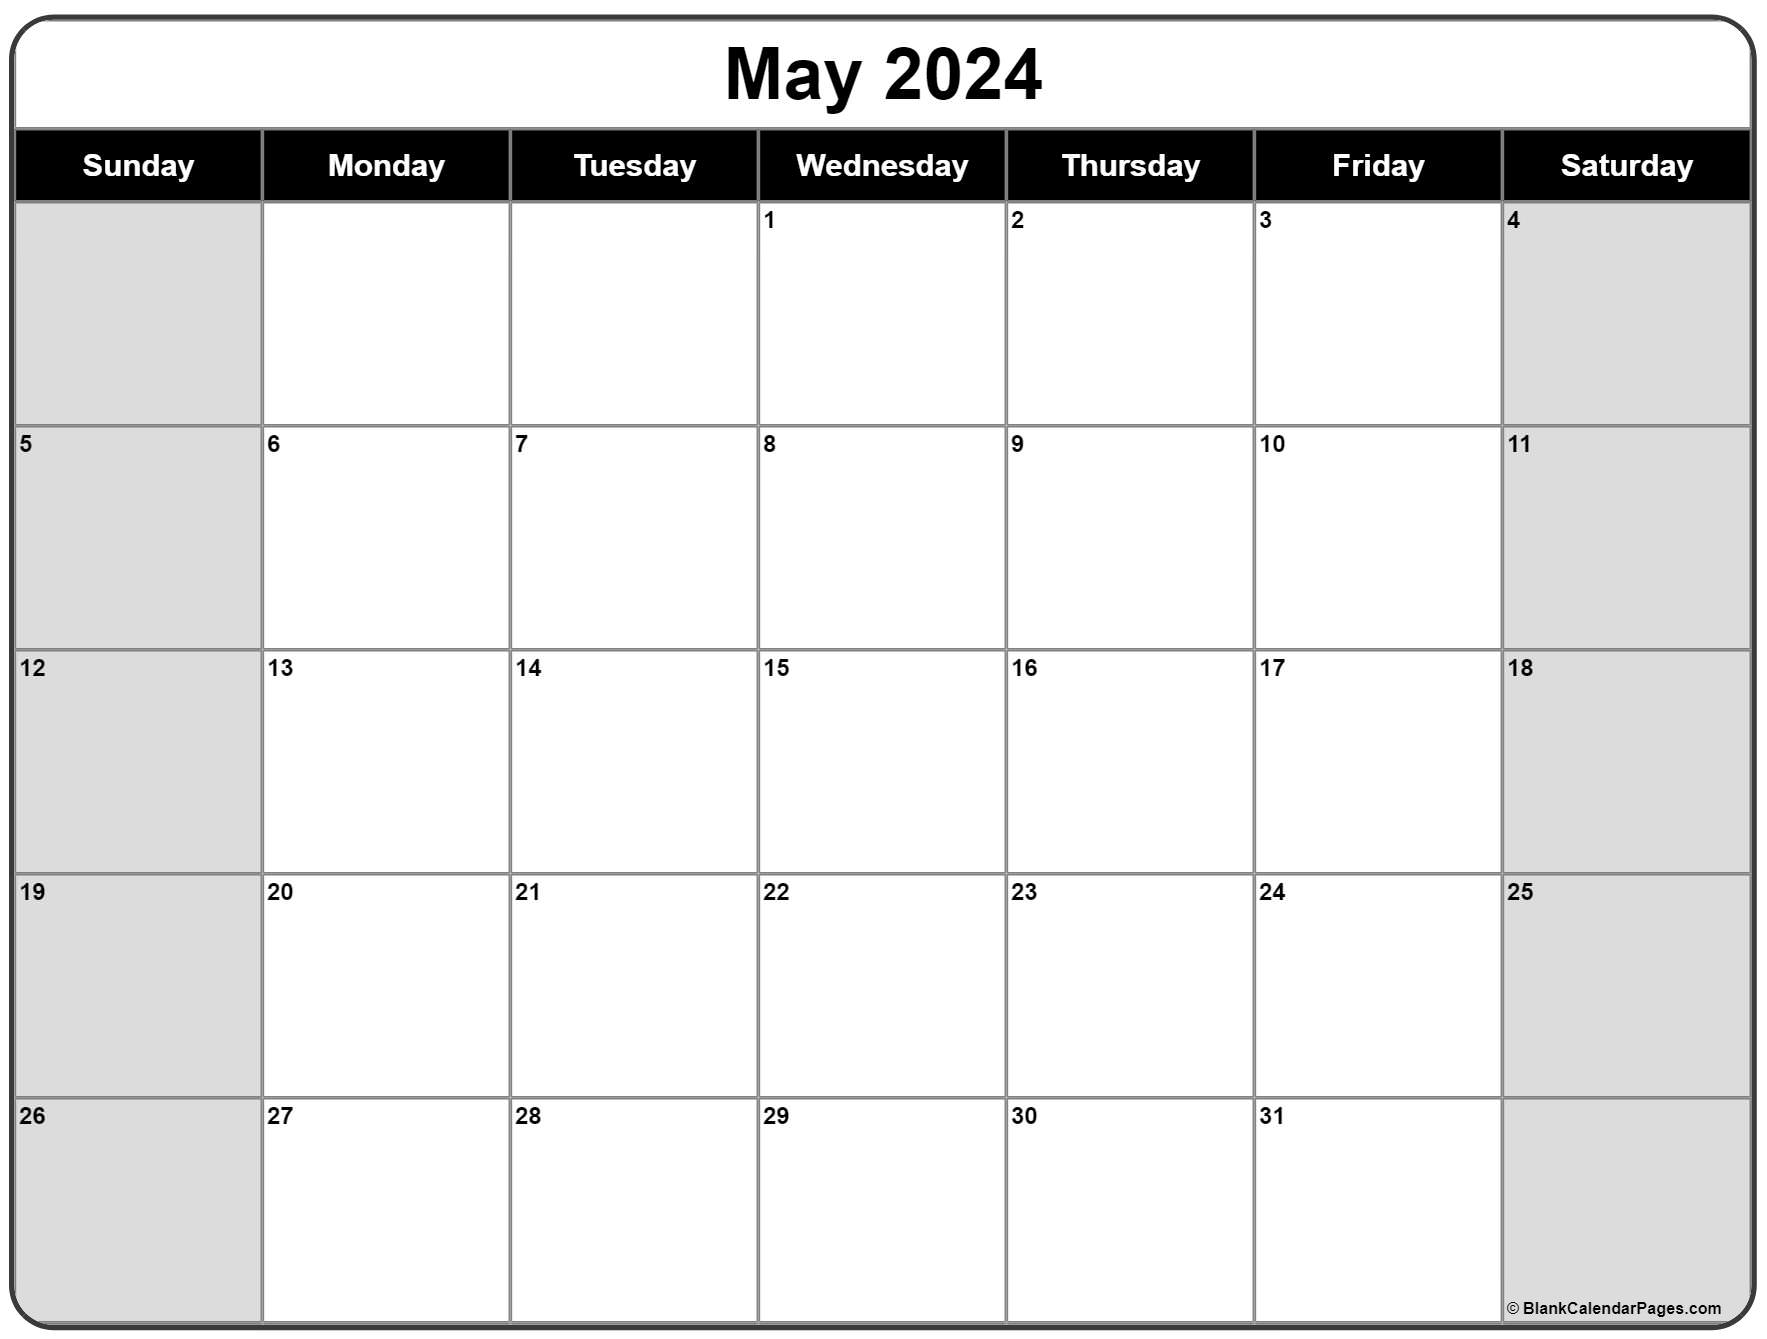 May 2022 calendar | free printable monthly calendars